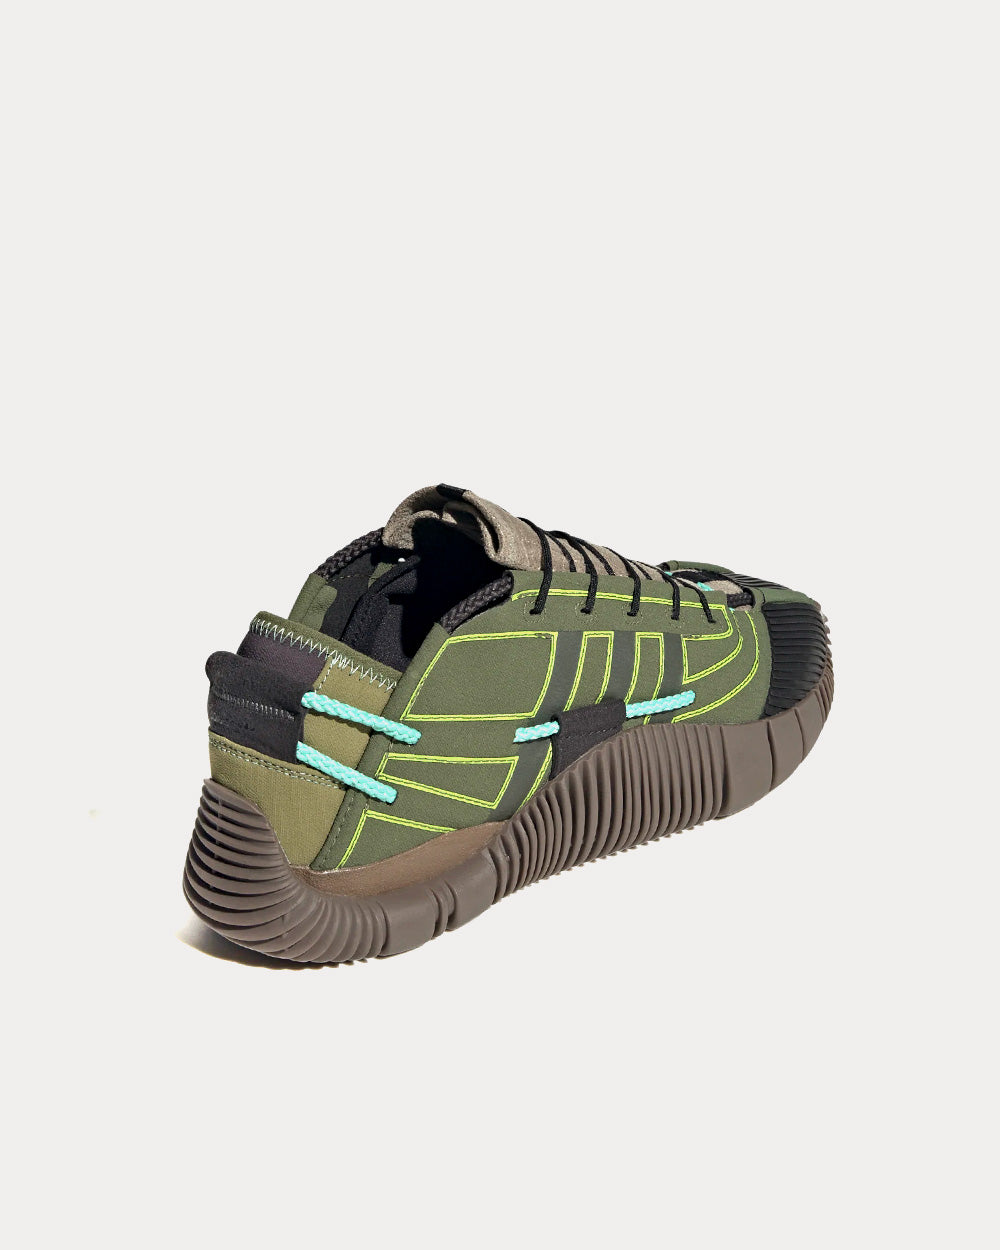 Adidas x Craig Green - Scuba Phormar Wild Pine Low Top Sneakers